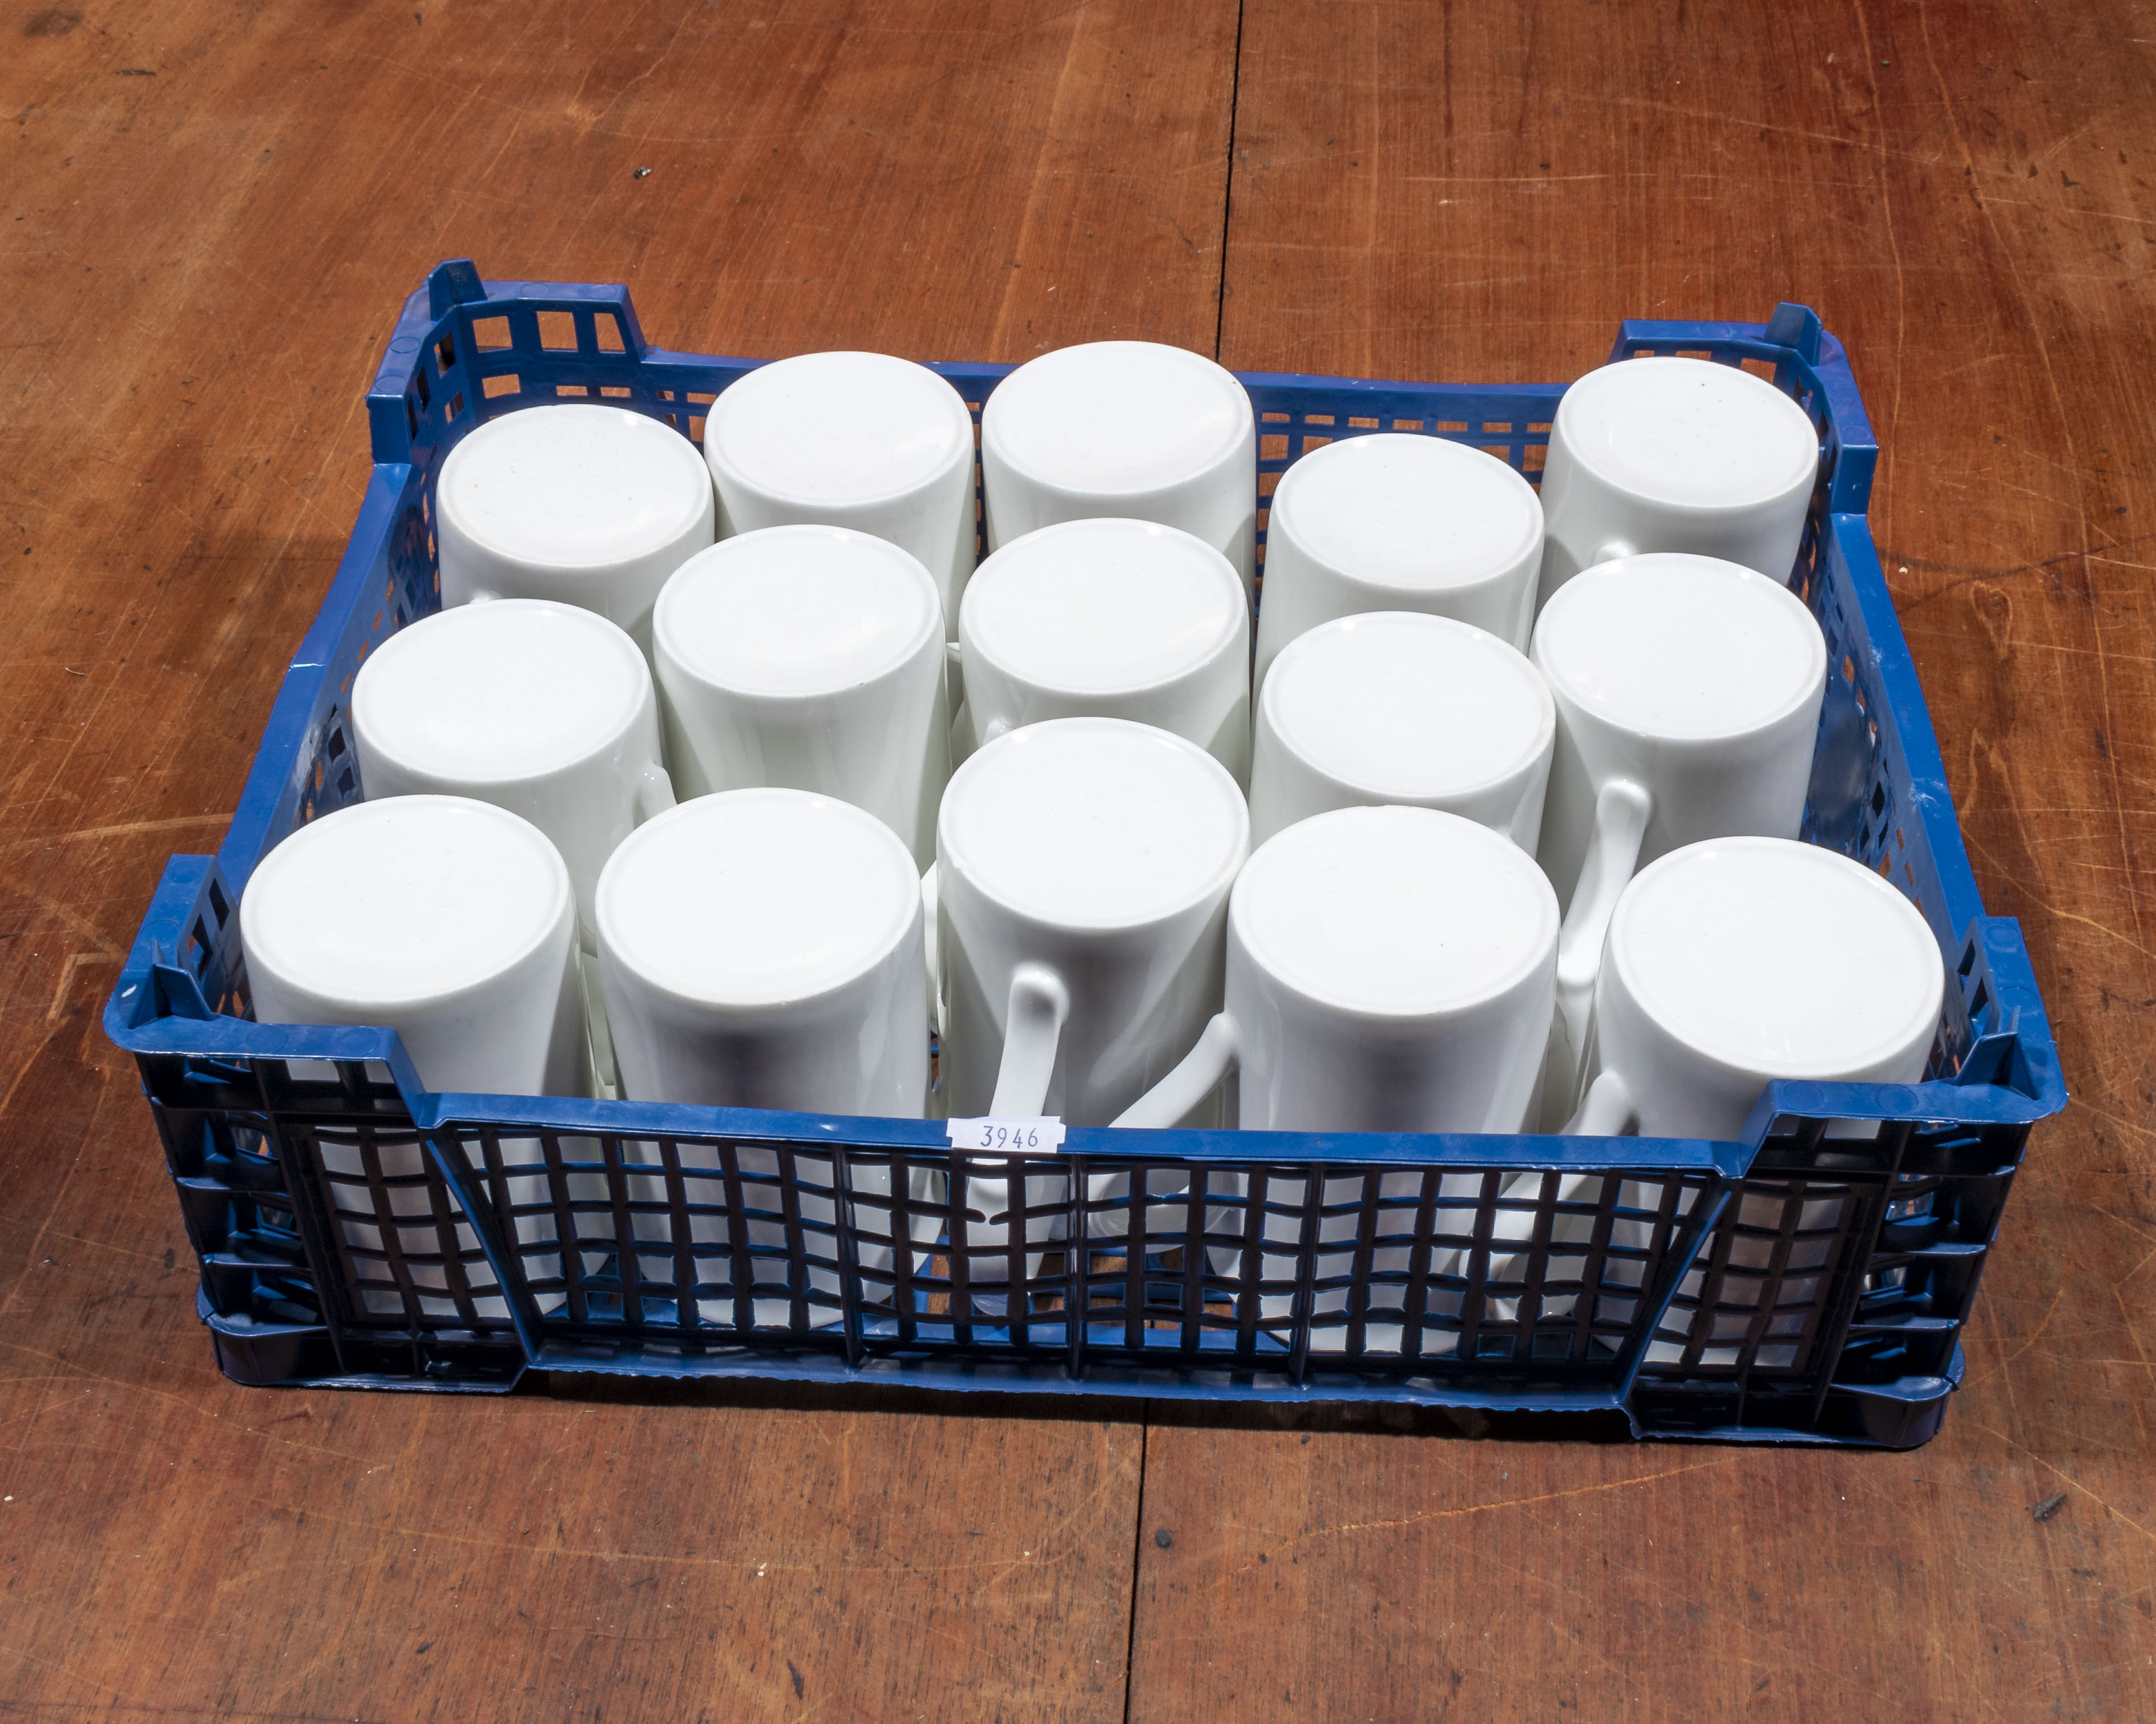 A tray of white coffee mugs